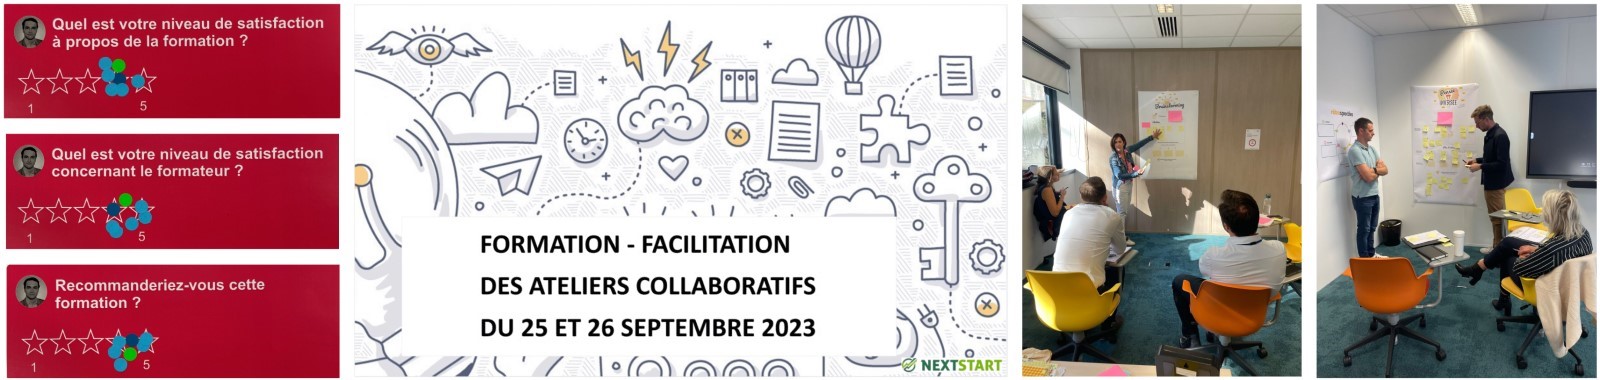 Facilitate participatory meetings